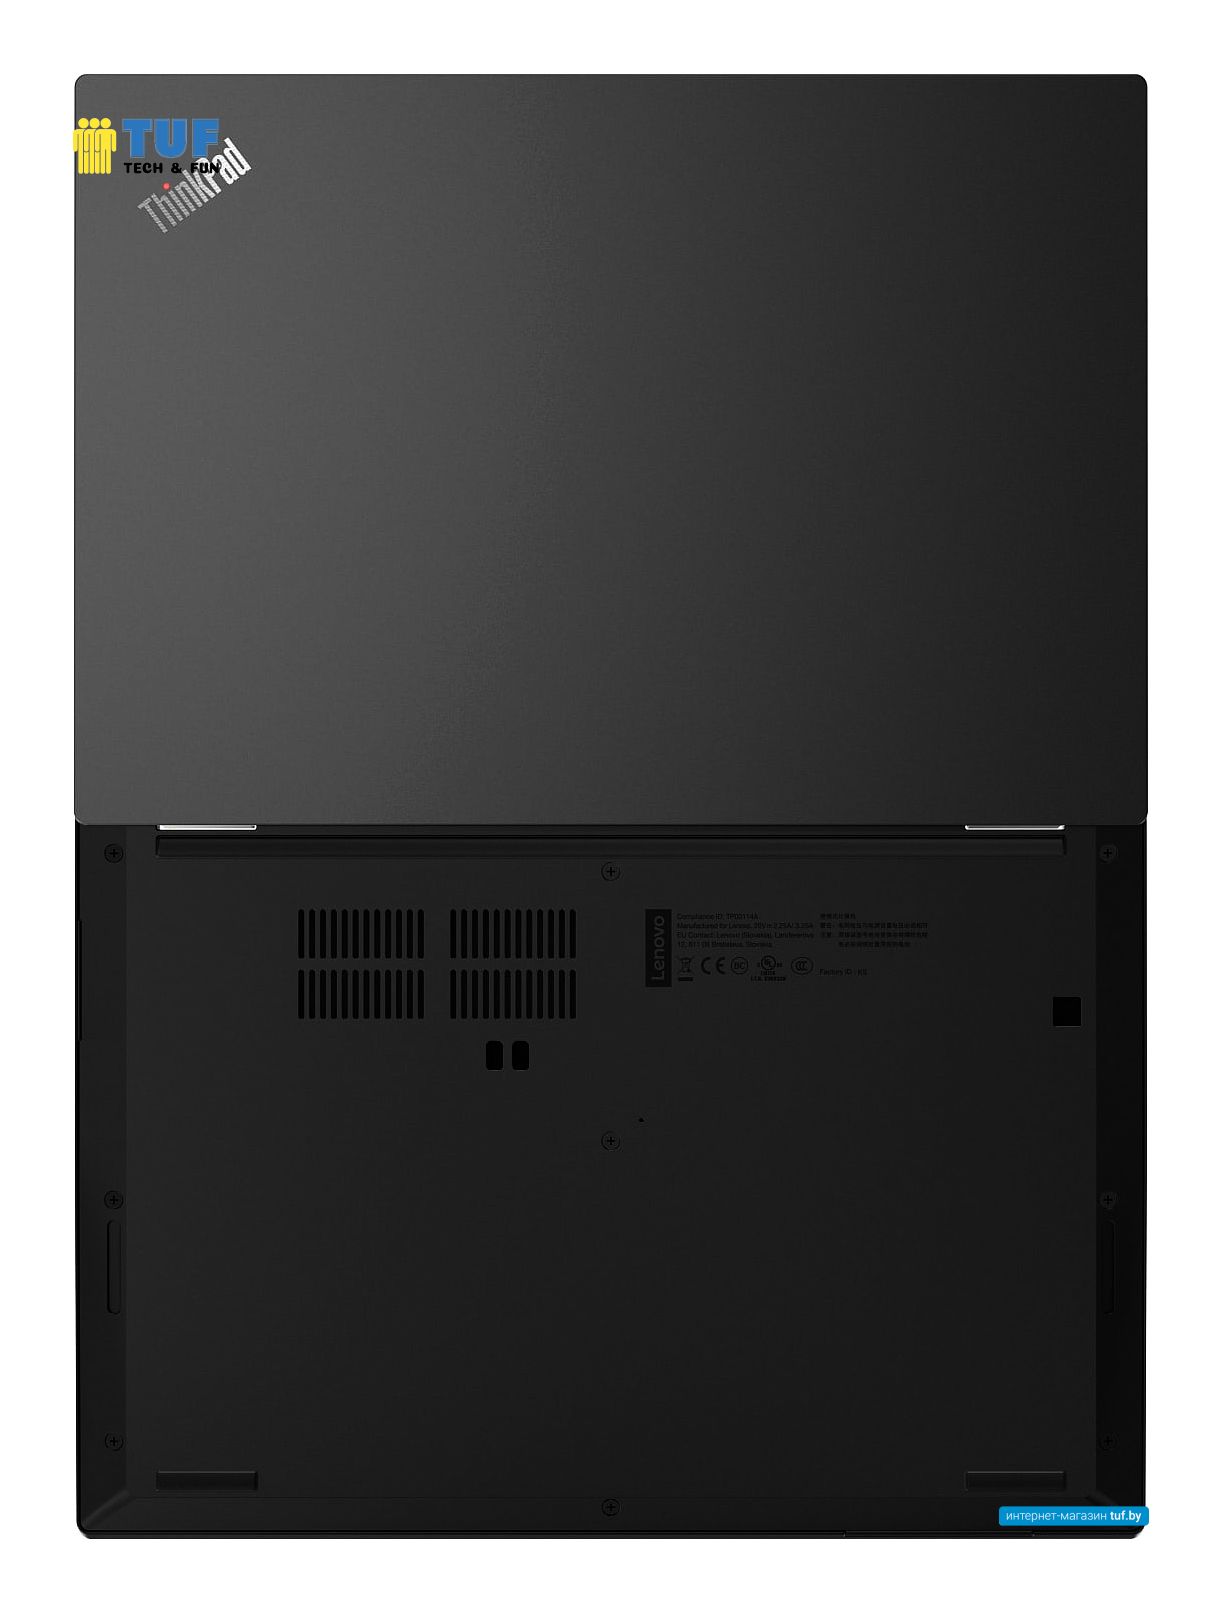 Ноутбук Lenovo ThinkPad L13 20R30009RT